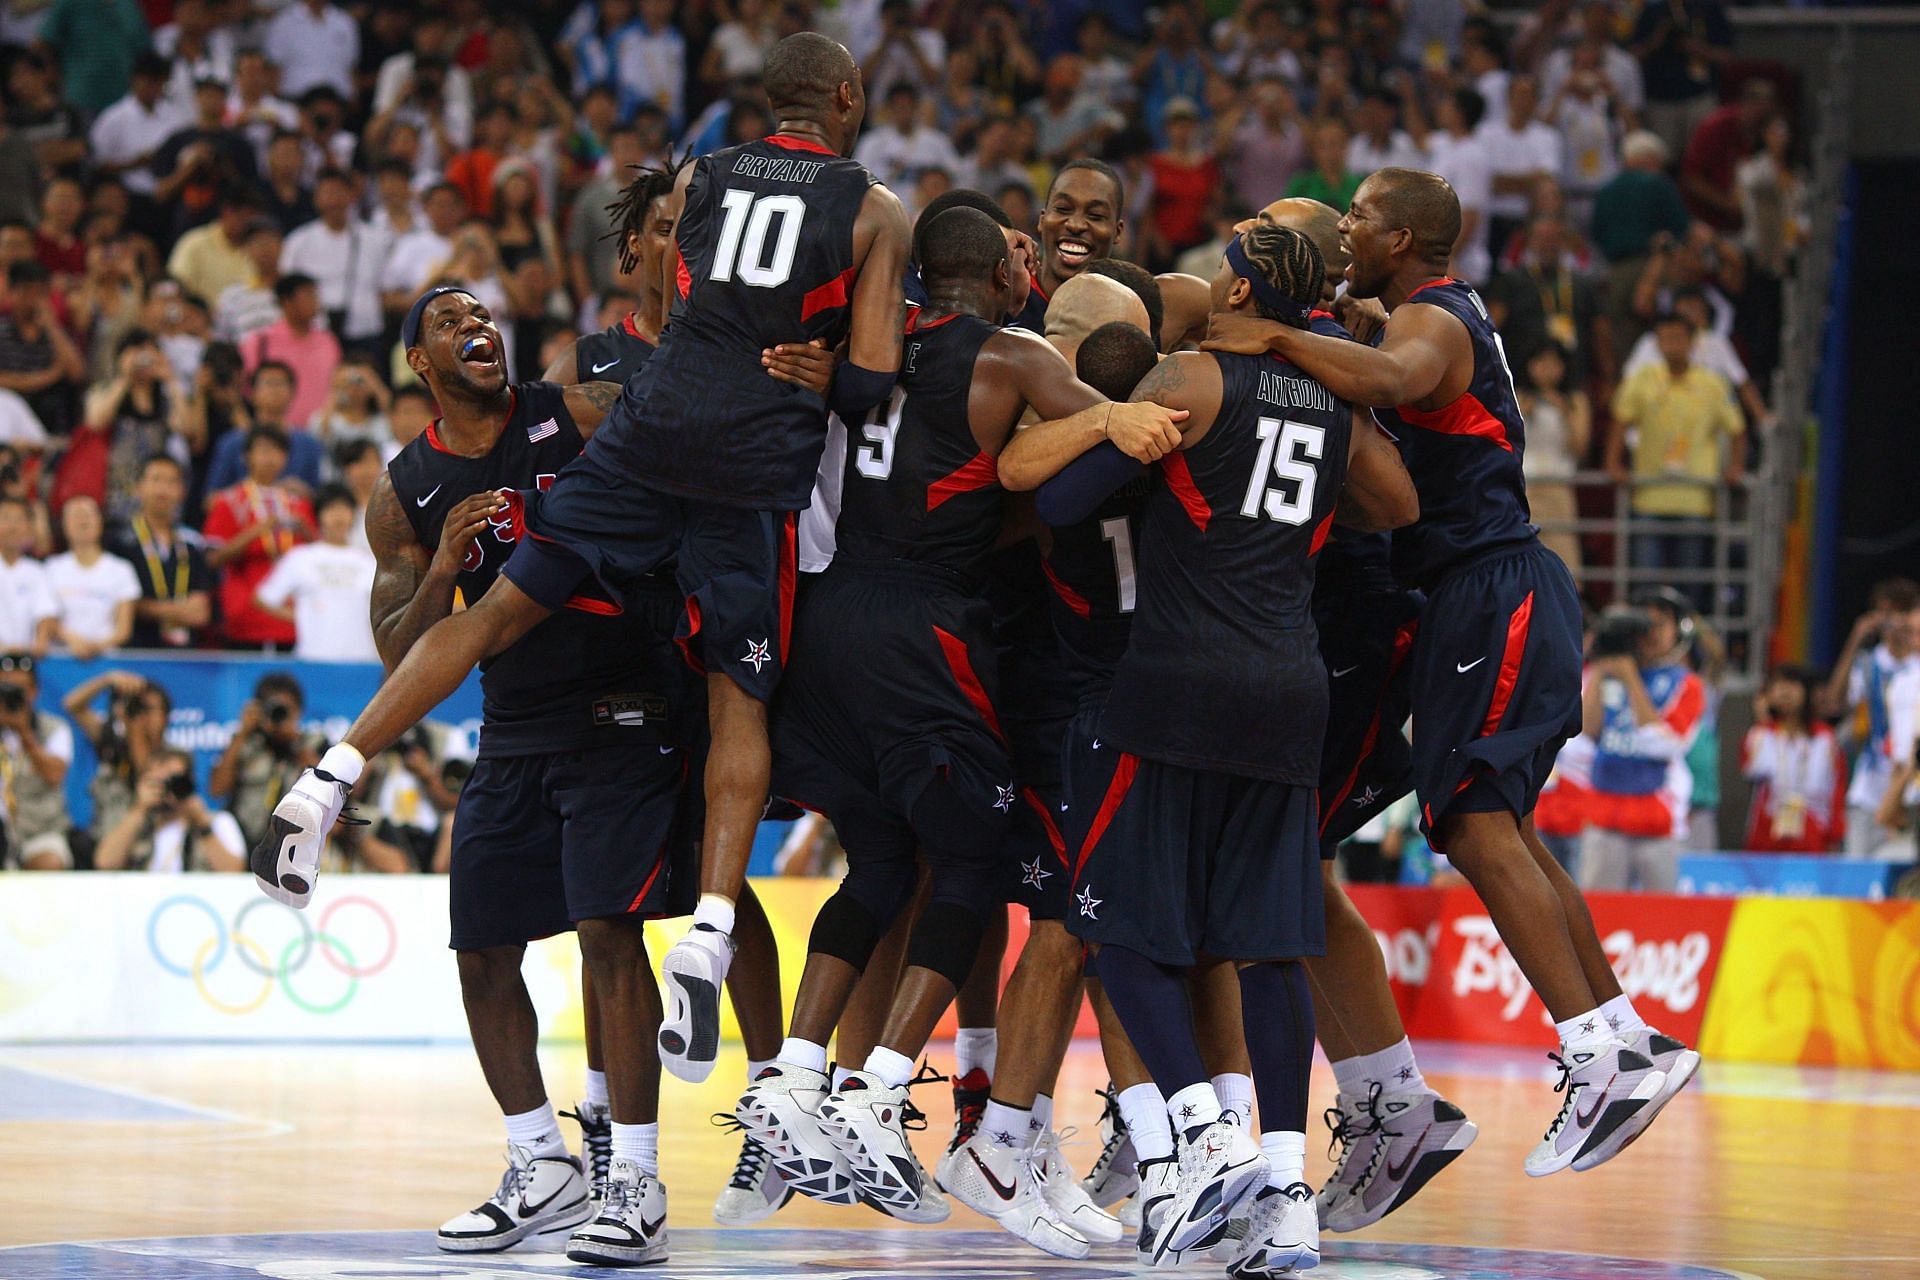 2008 Team USA led by Kobe Byrant and LeBron James.